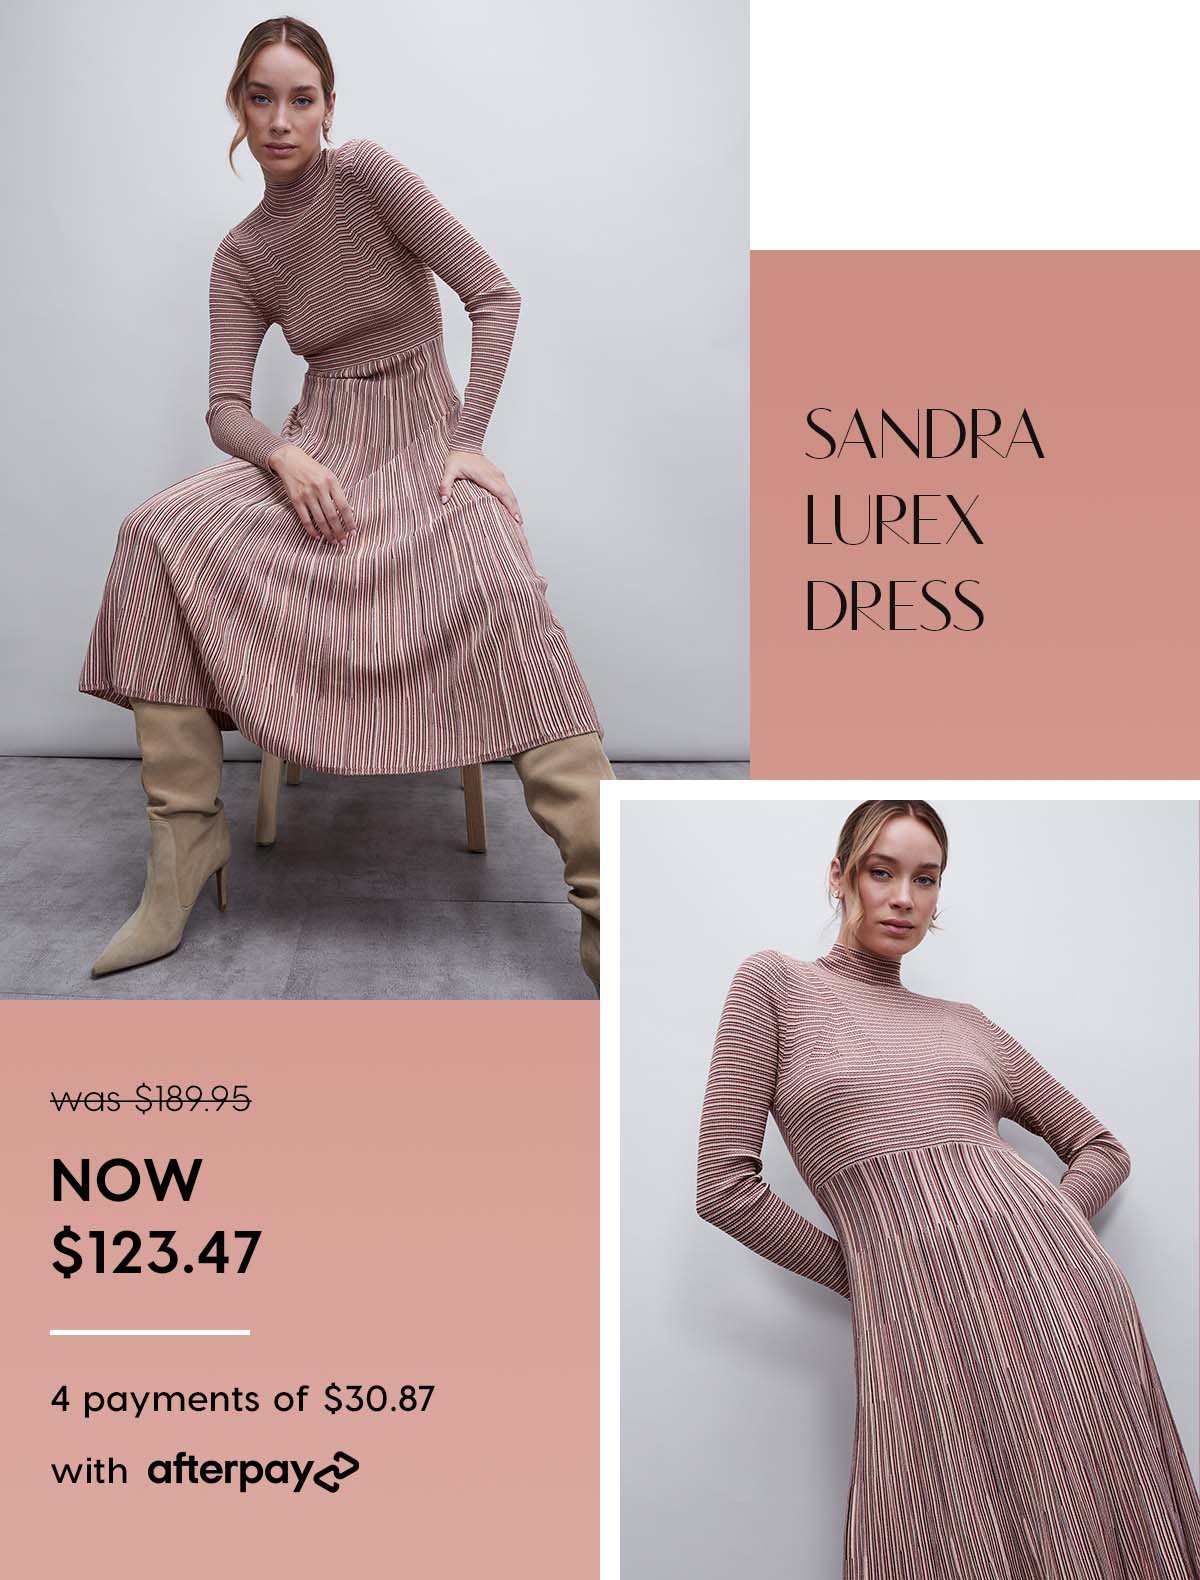 Sandra Lurex Dress